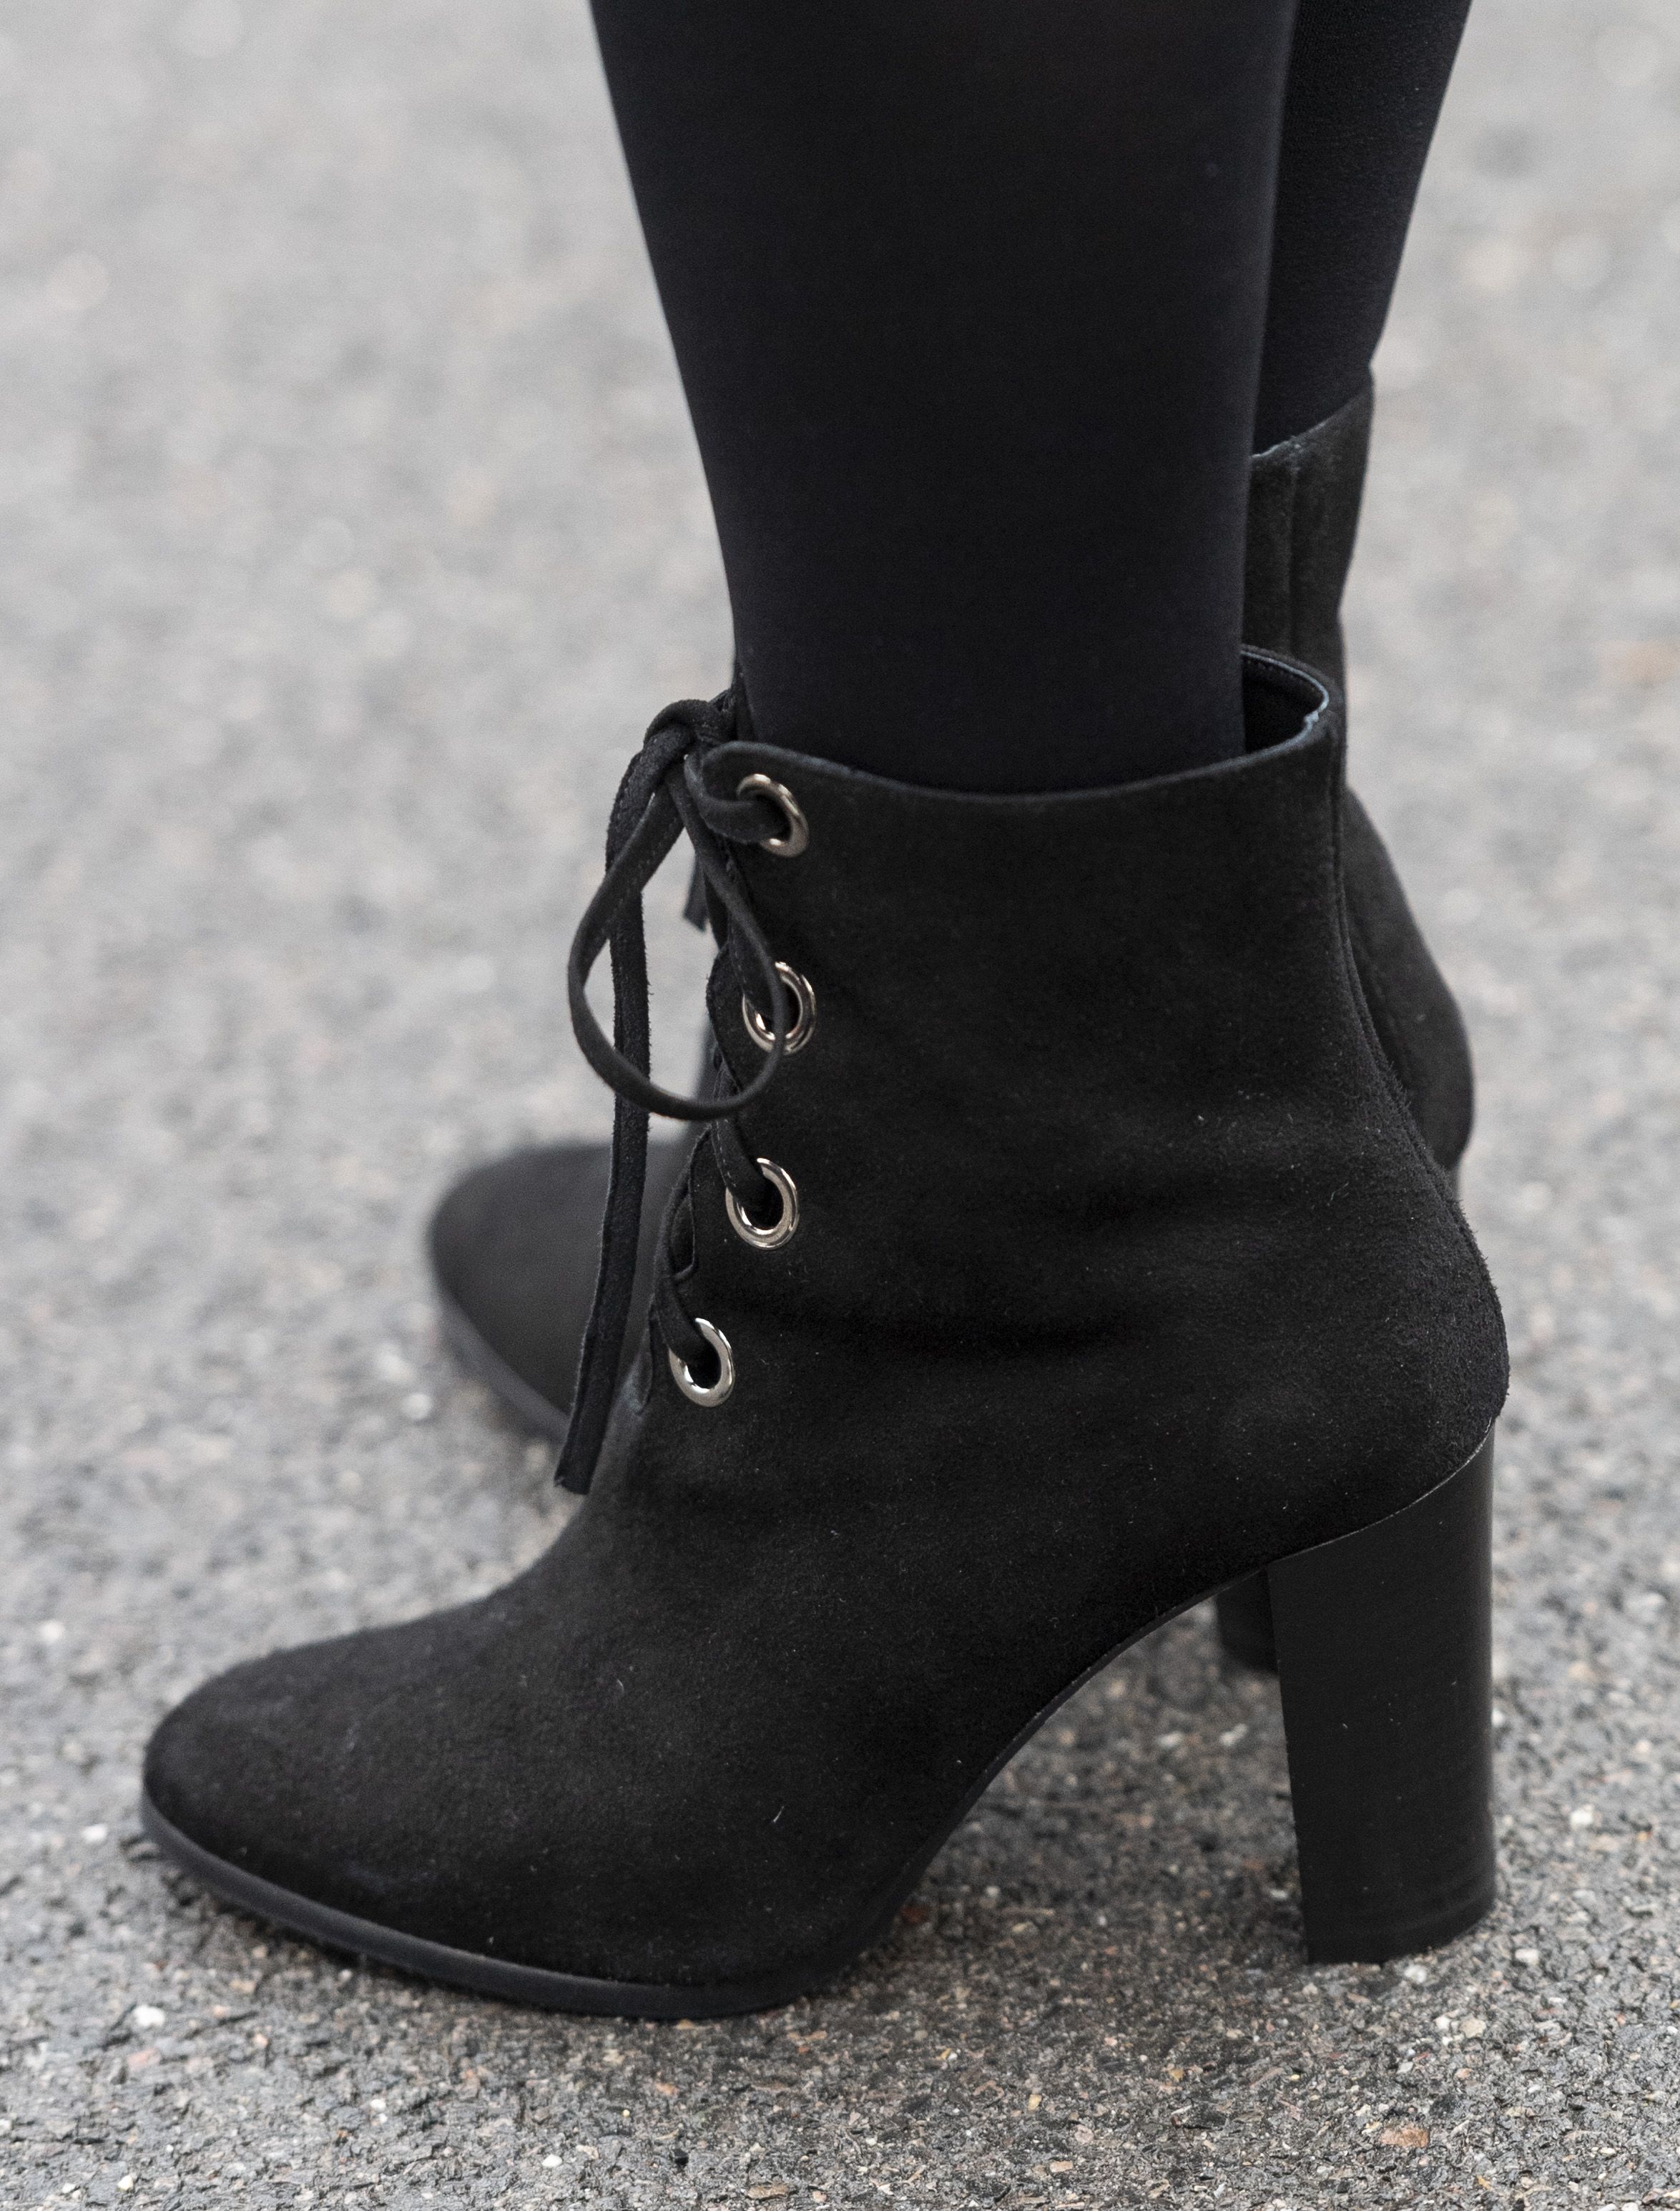 marissa black suede ankle boots